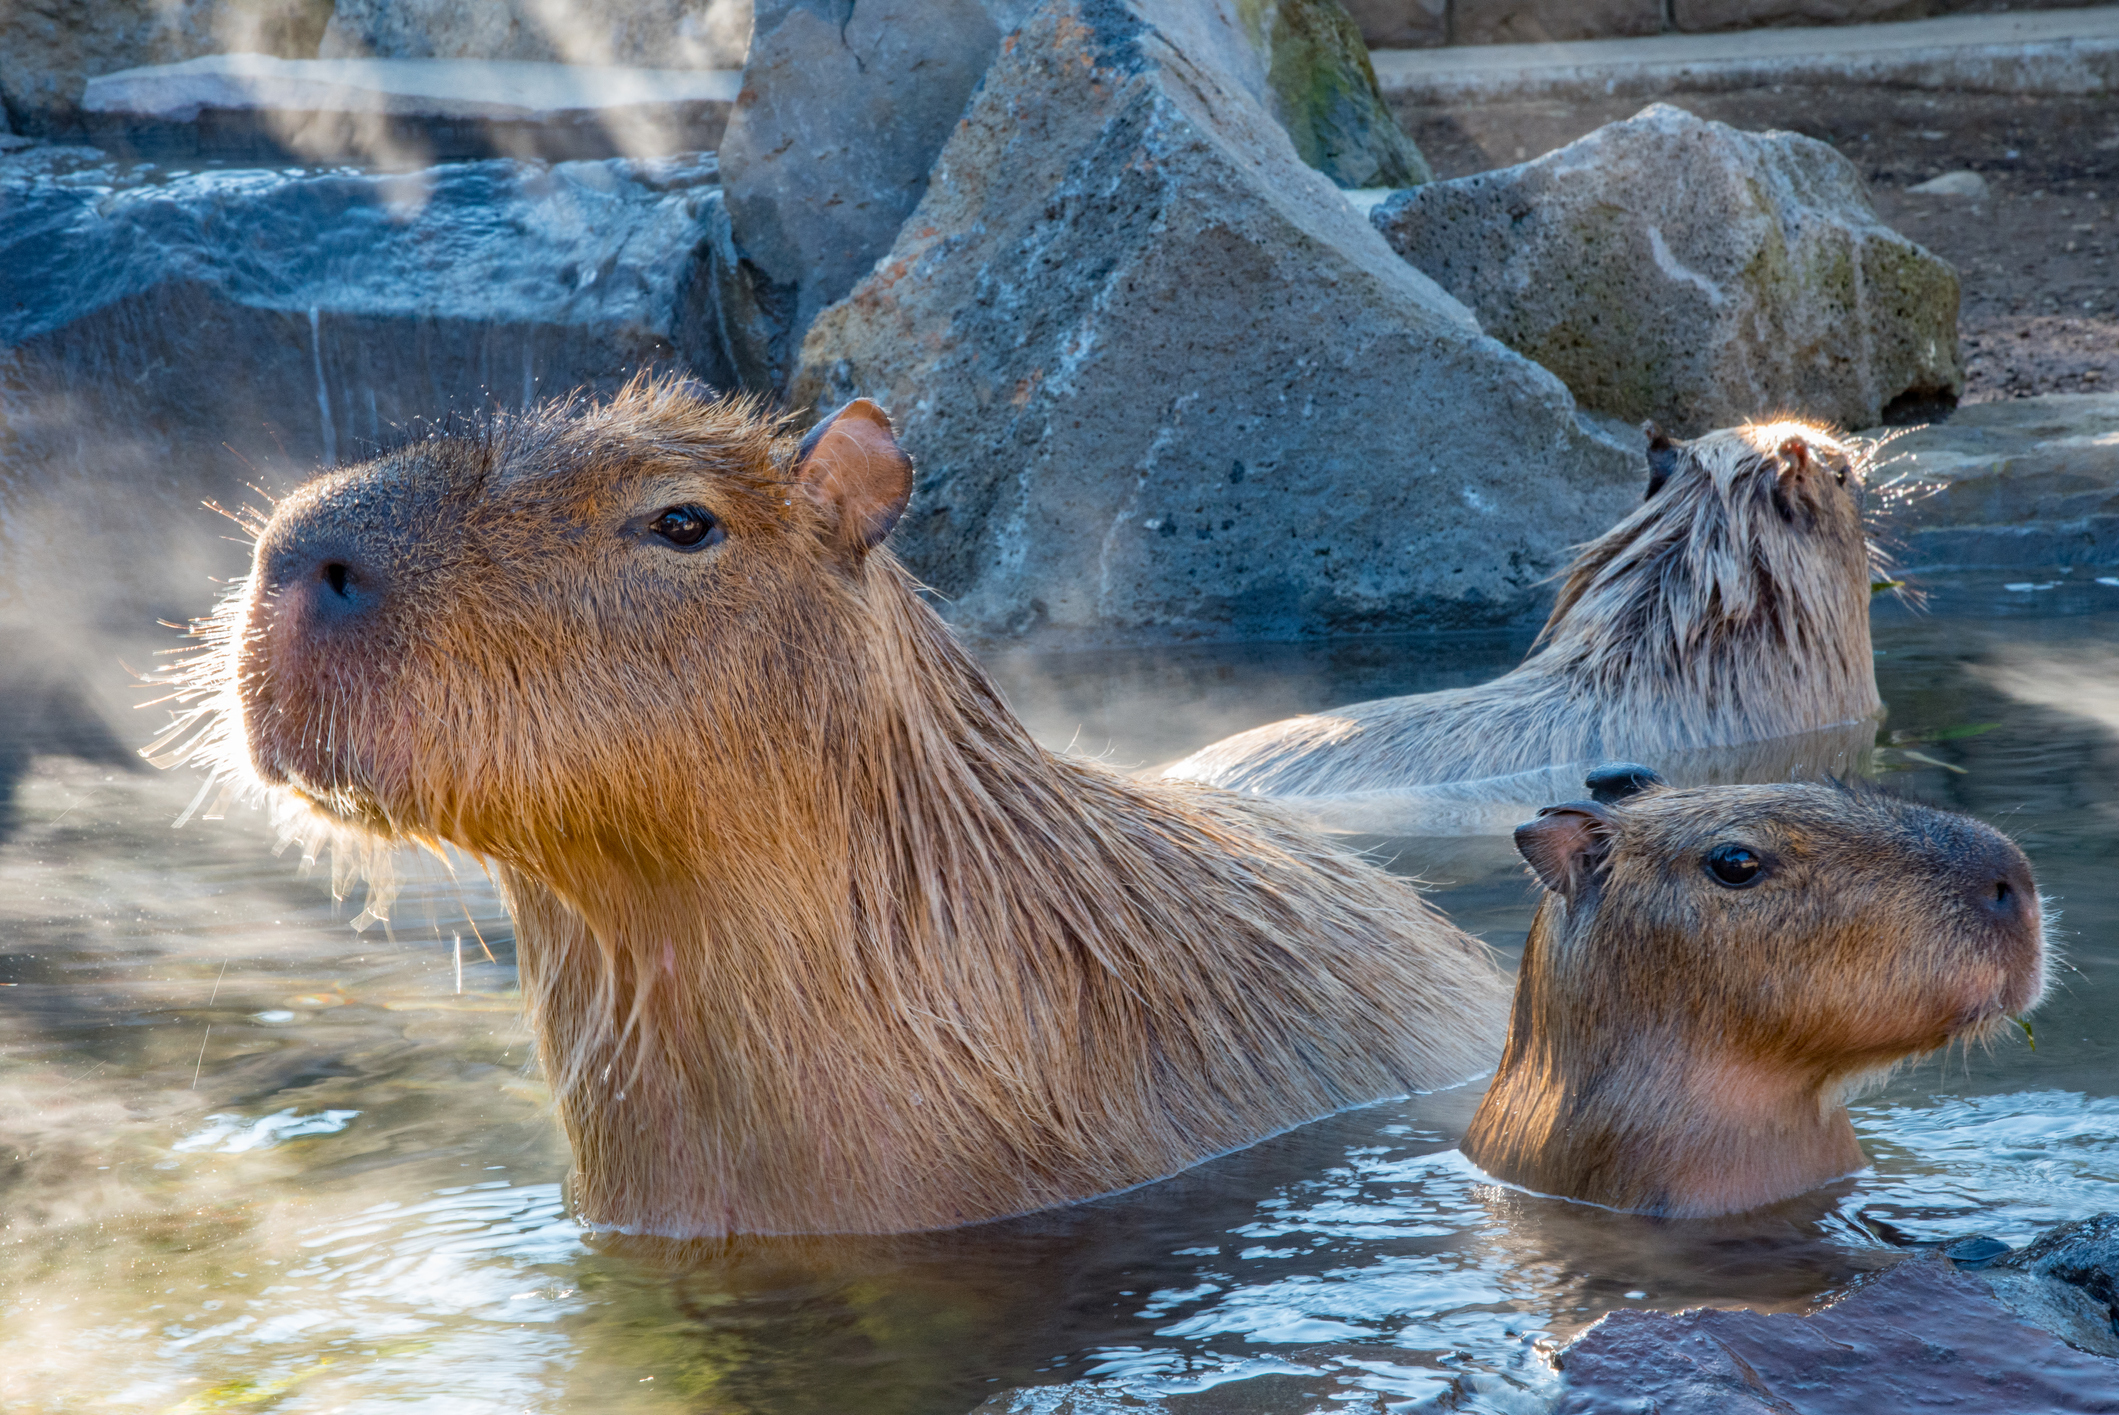 https://d.newsweek.com/en/full/2315031/capybaras-lounging-hot-spring.jpg